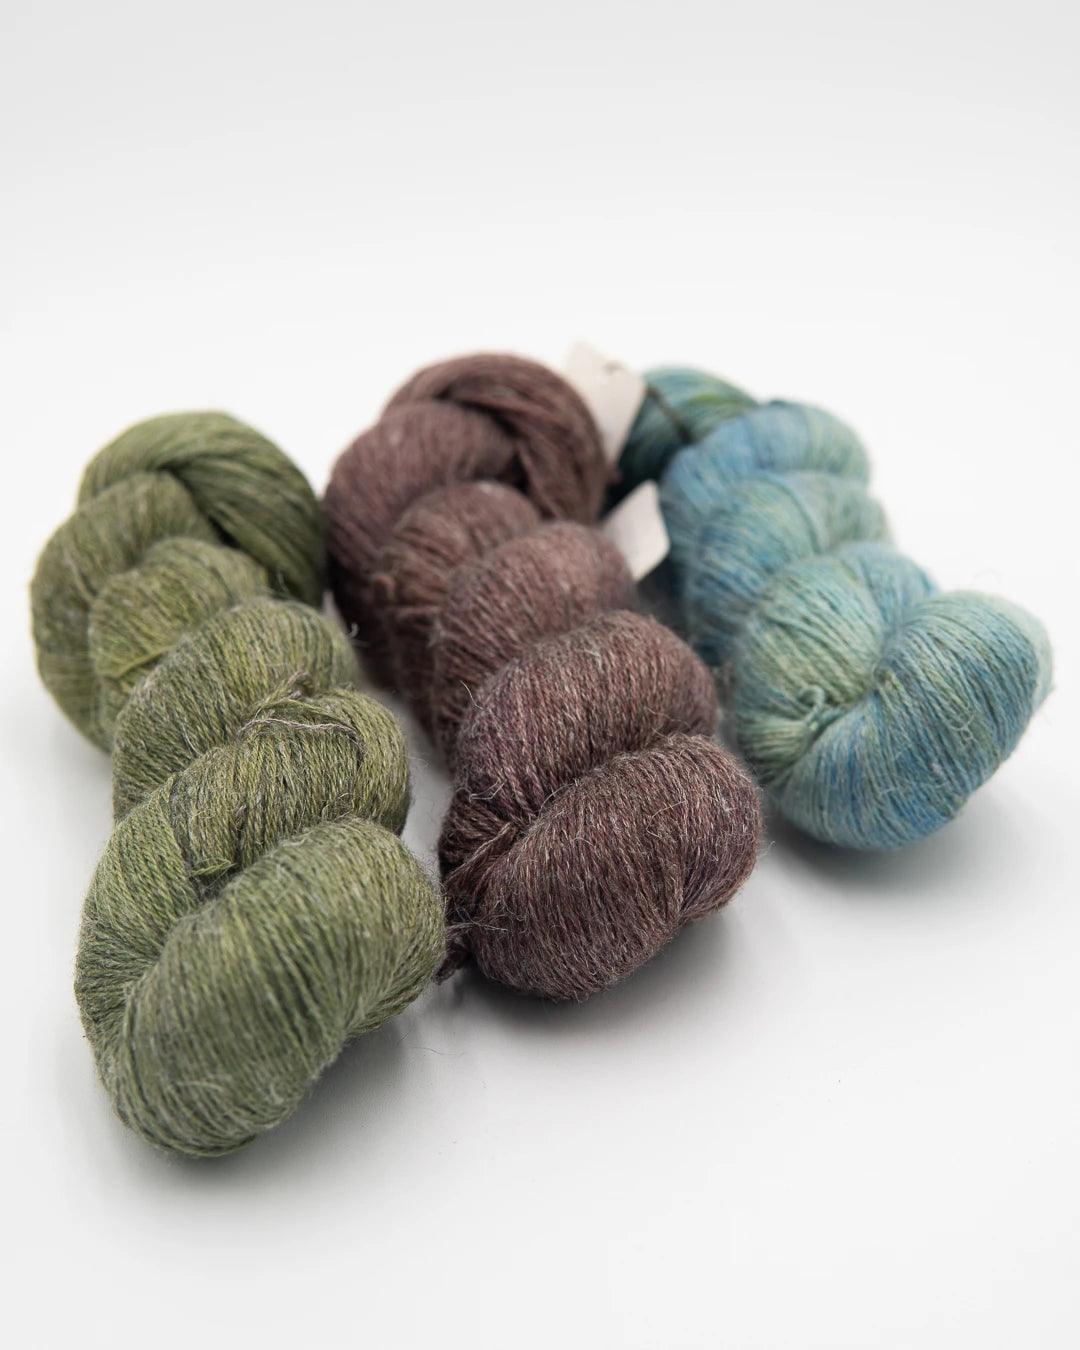 Organic Wool & Linen Fingering Yarn - Aimee Sher Makes